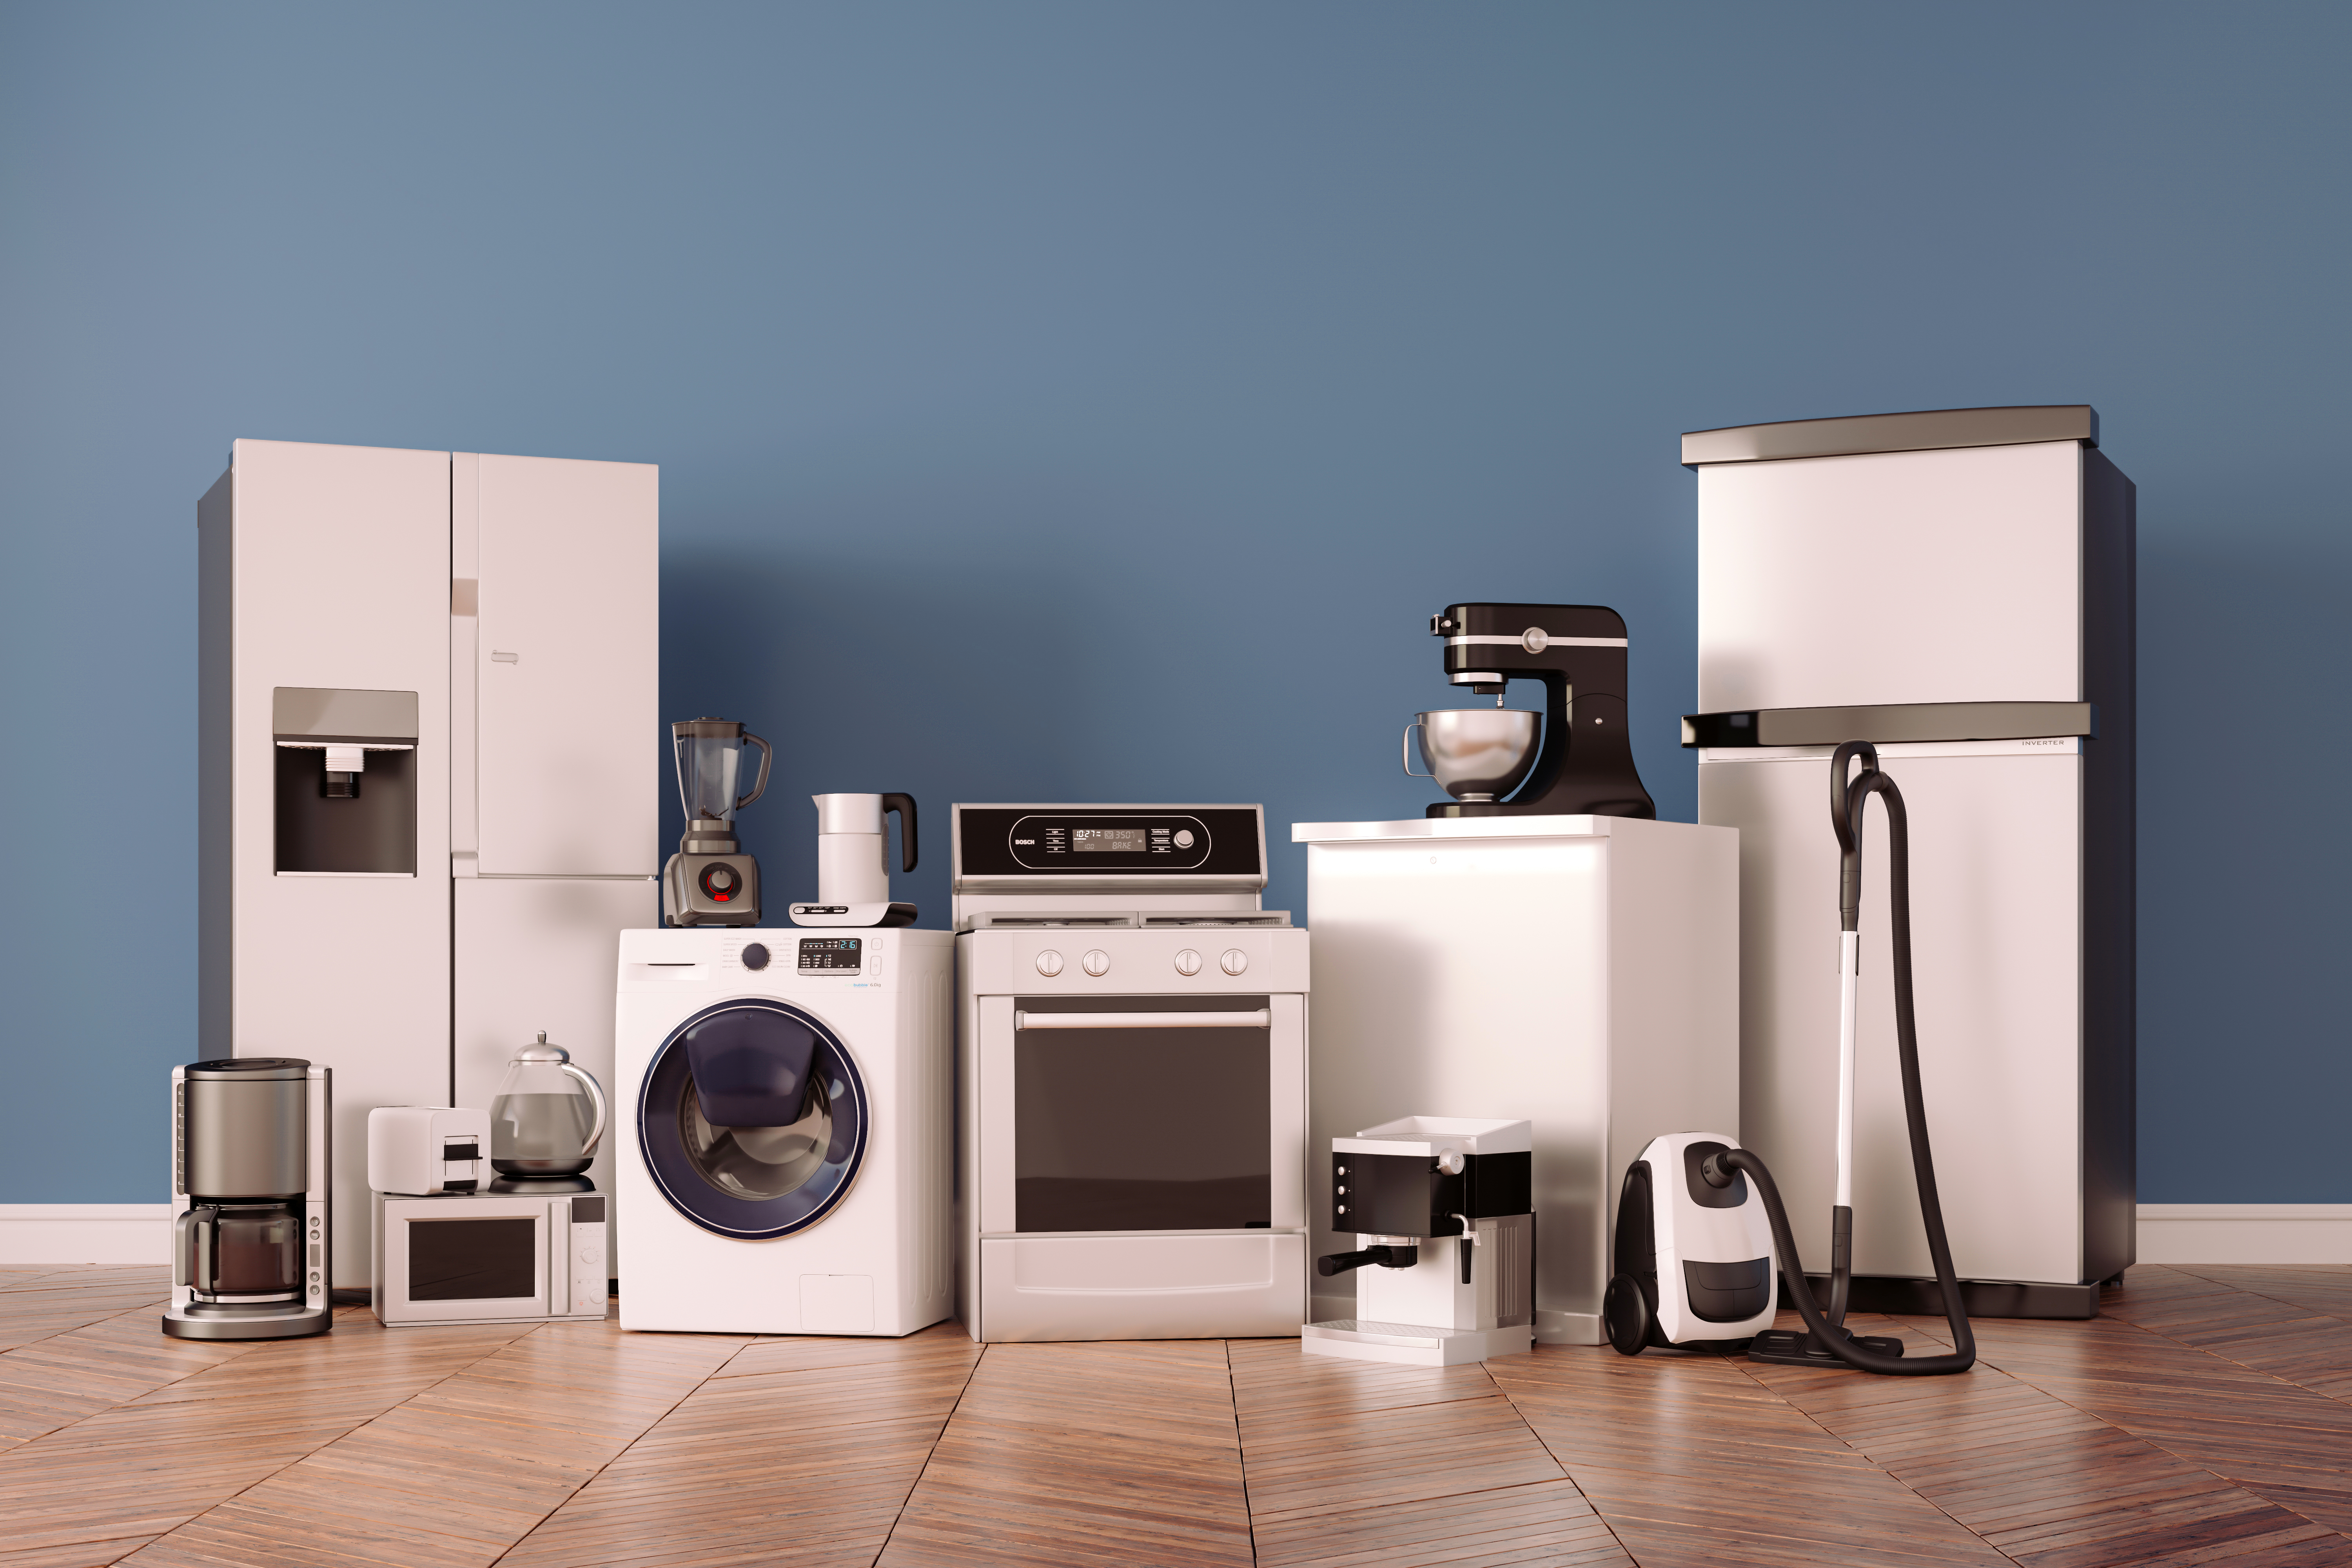 Home Depot, Lowe's, or Walmart: Which has the best appliance warranties?